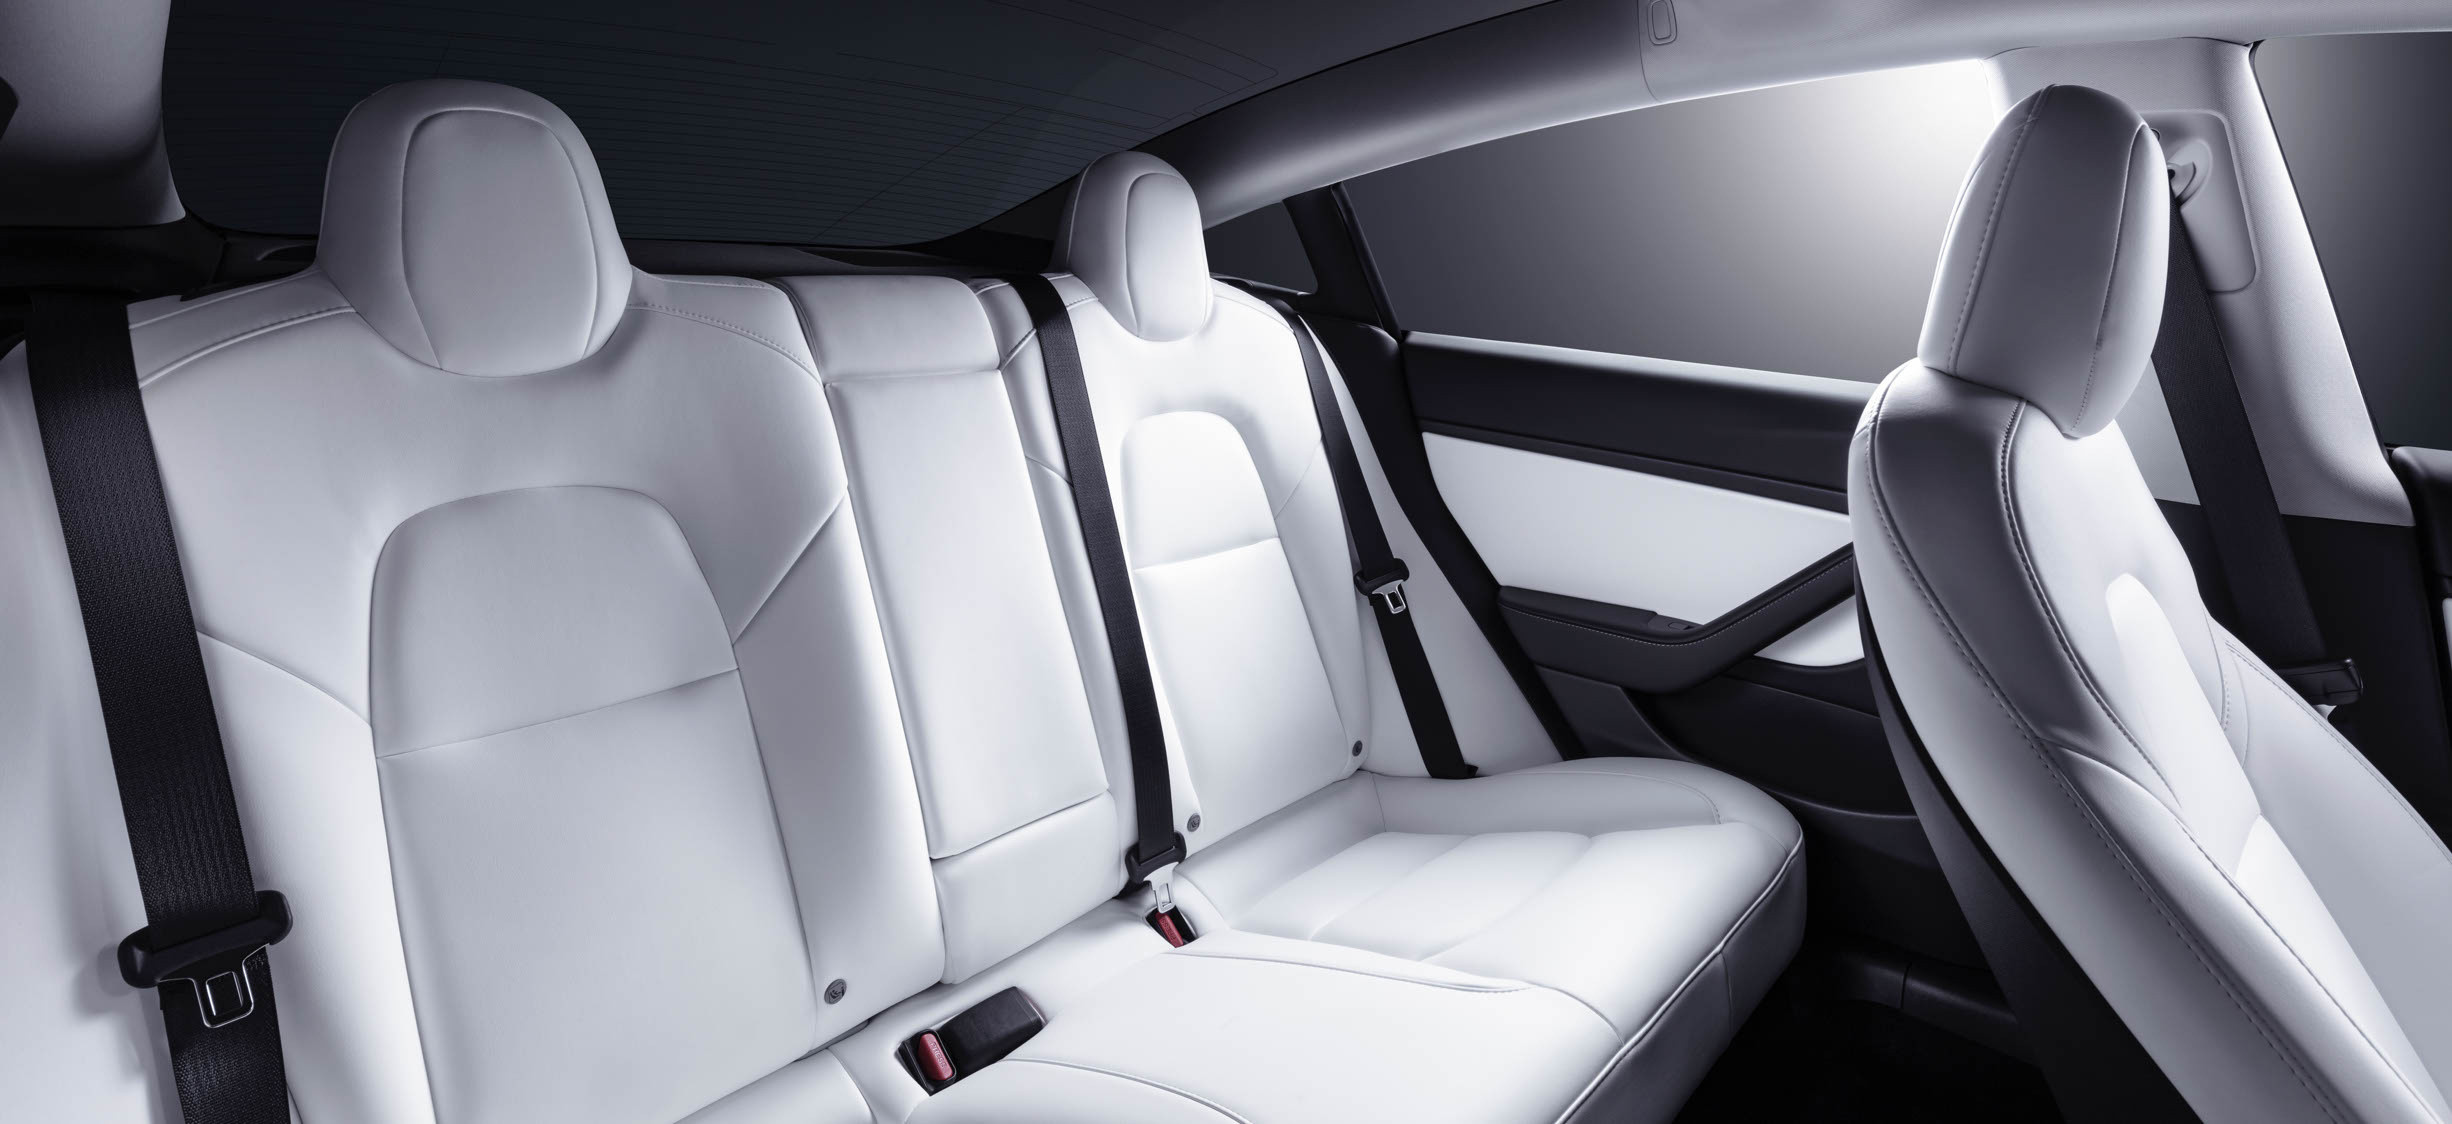 New-Tesla-Model-3-interior-6.jpeg